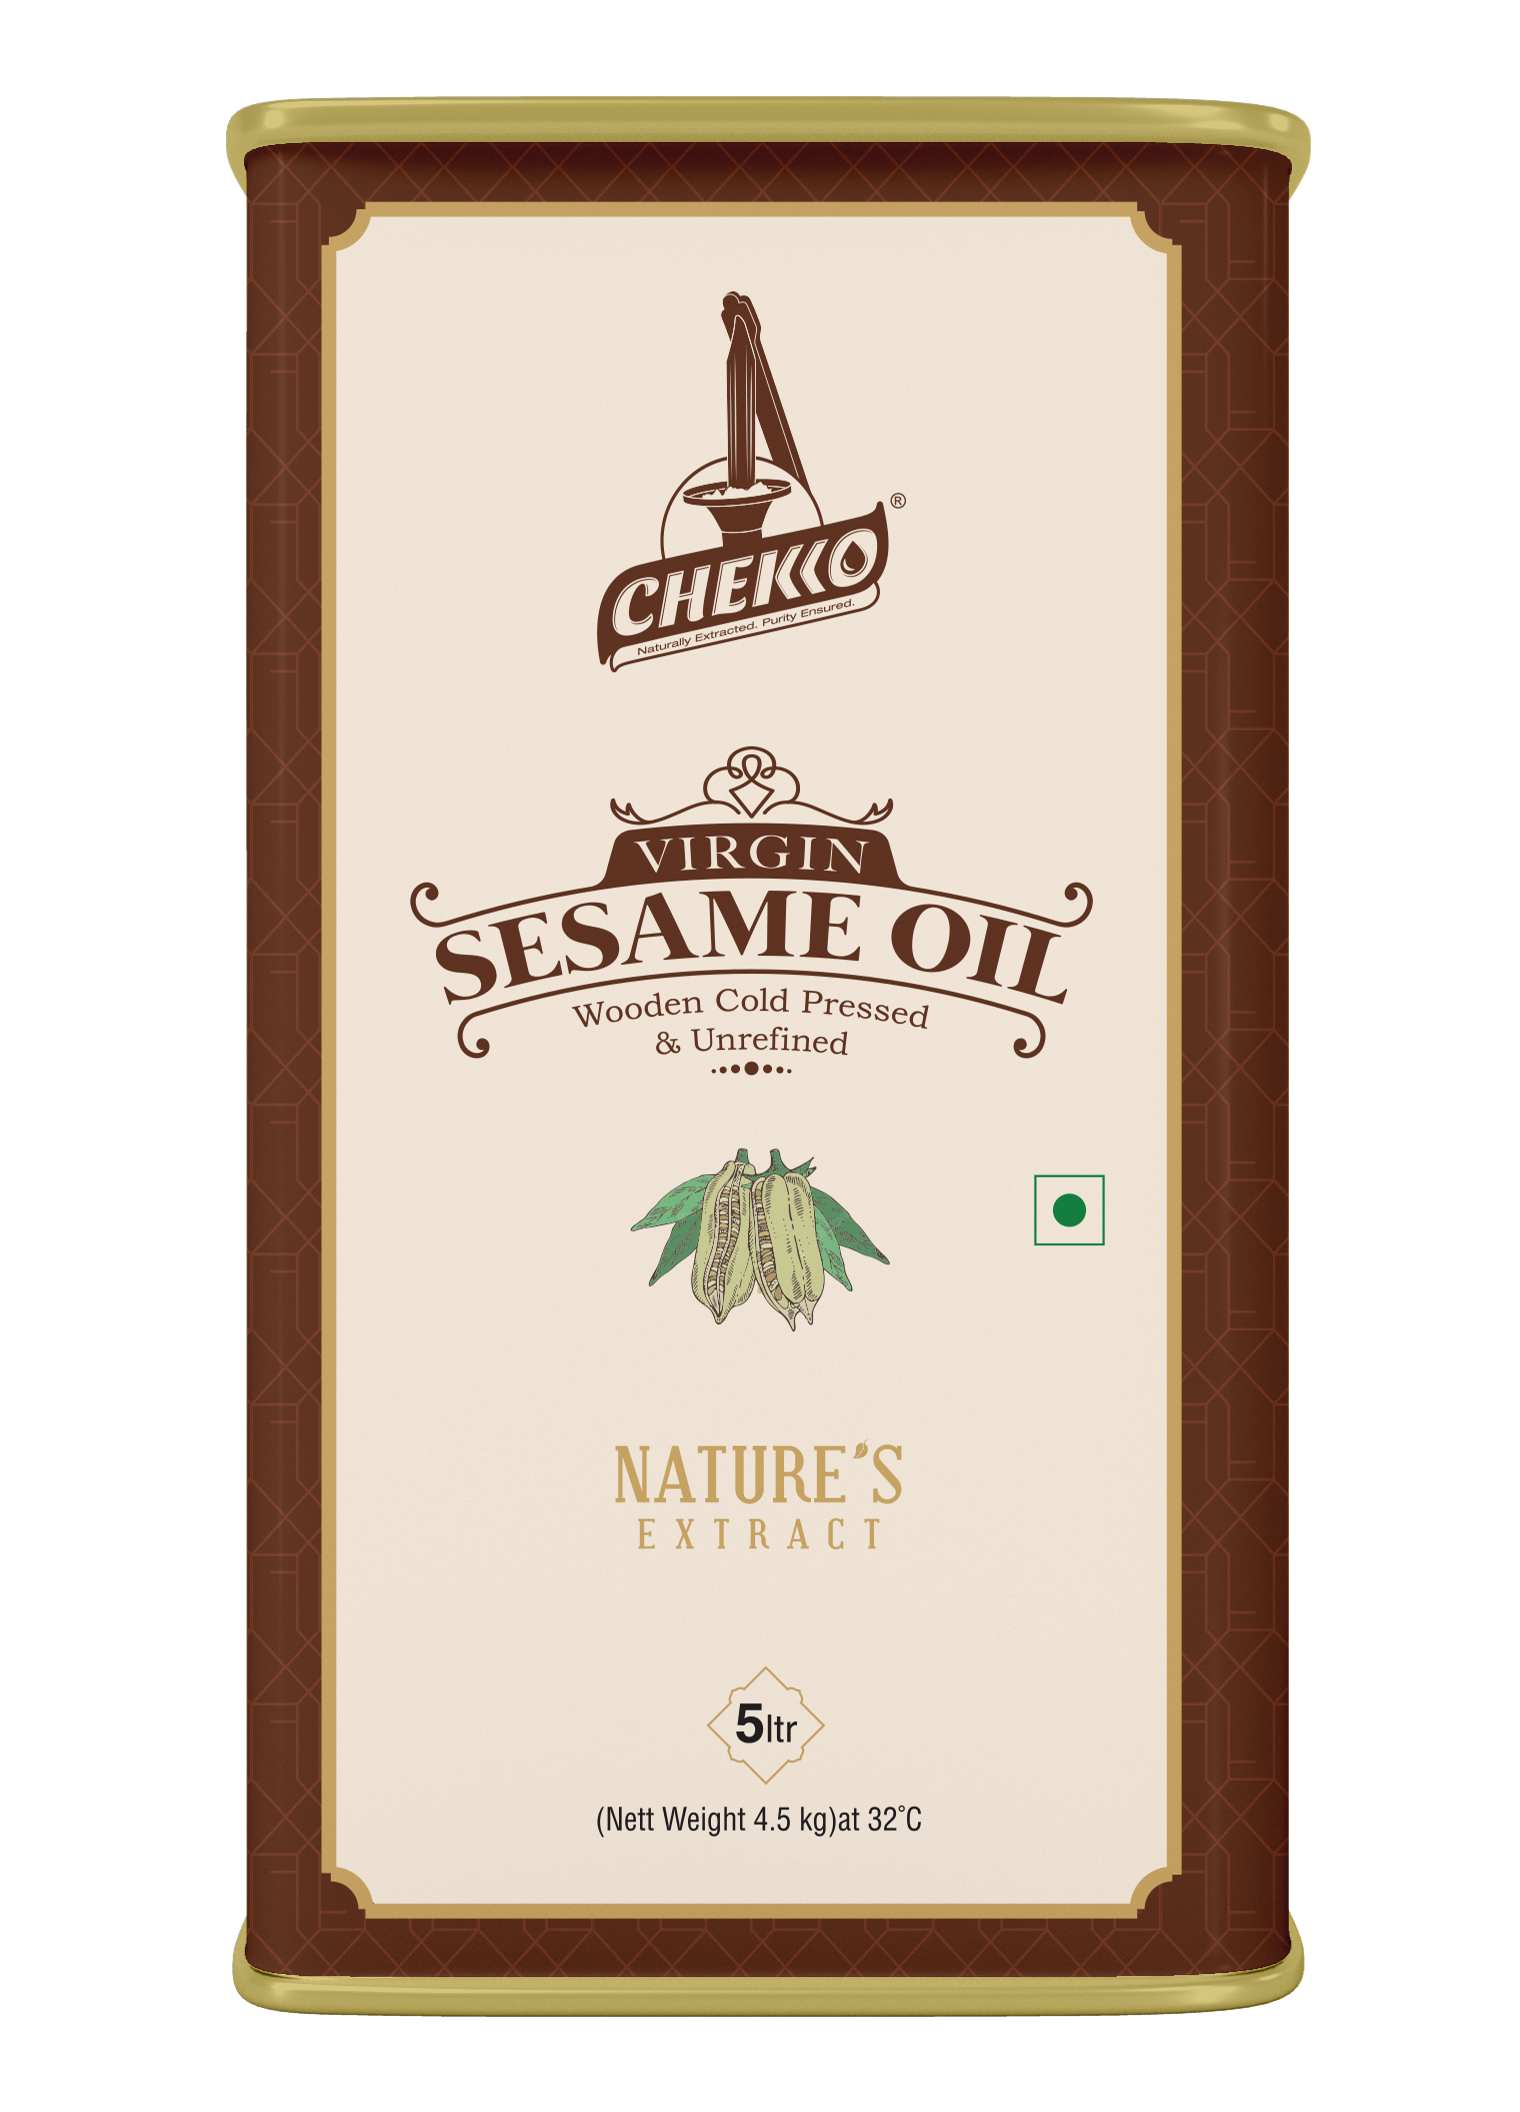 Chekko Cold Pressed Virgin Sesame Oil - Chekko Oils Store